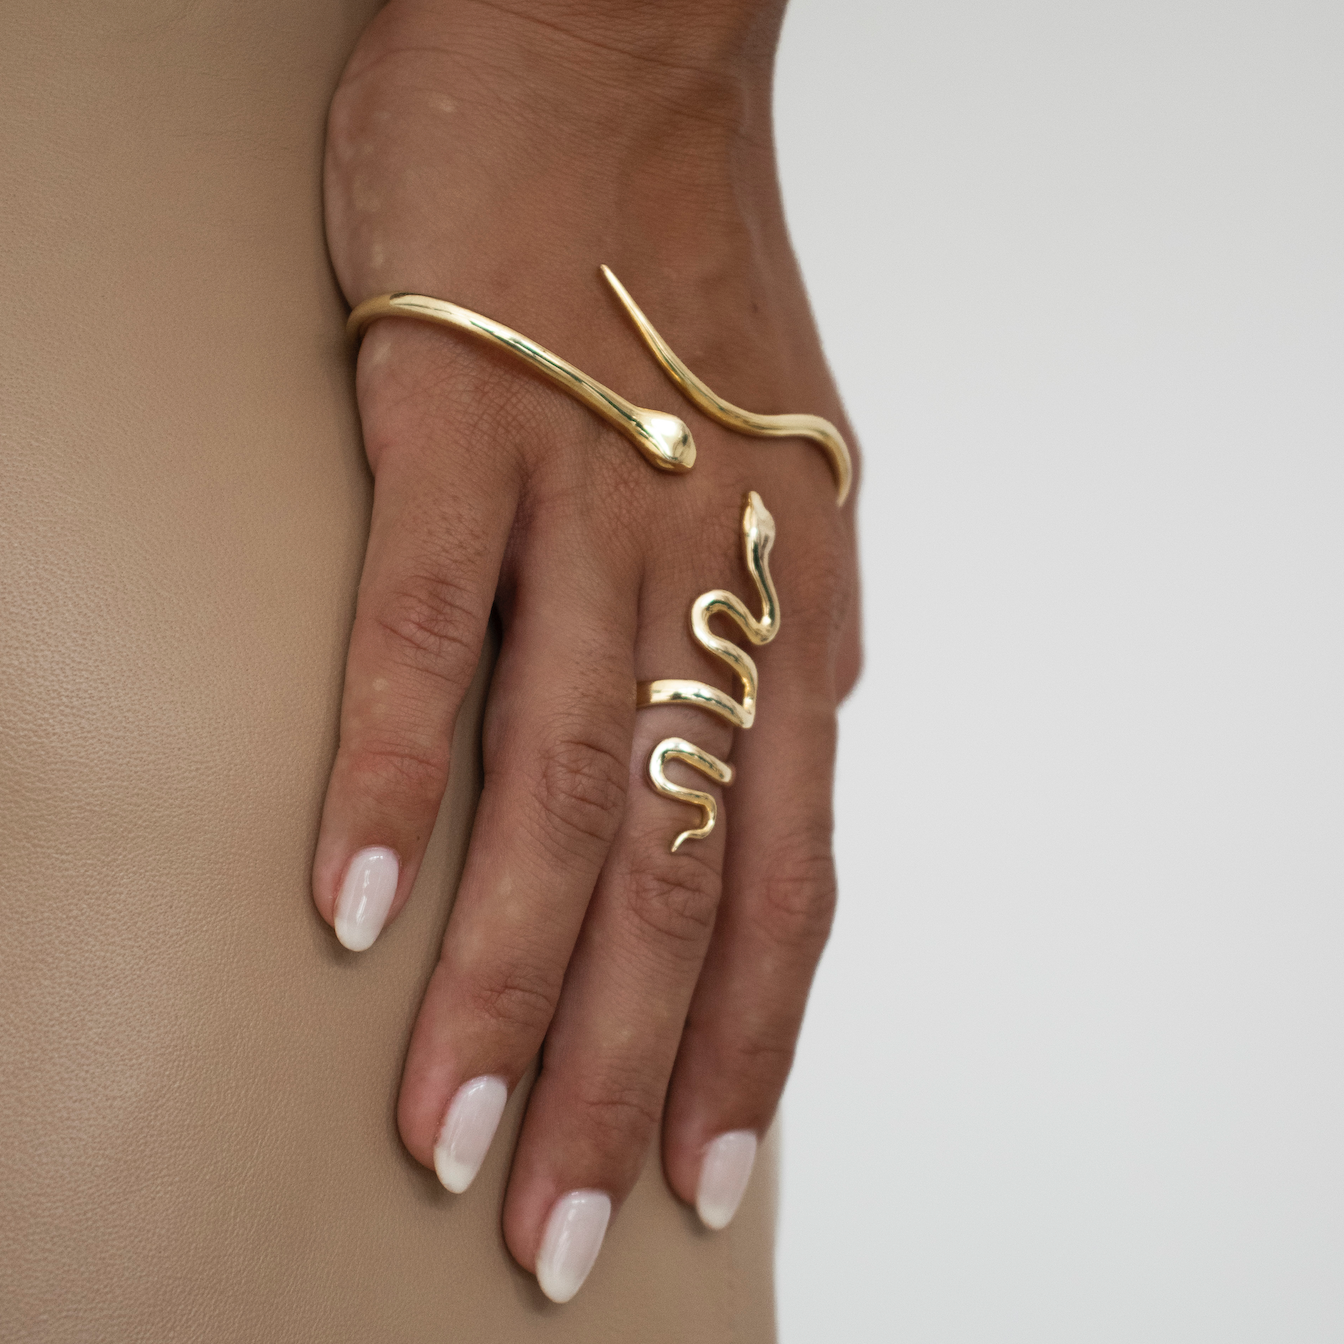 KIKICHIC | Nyc | Snake Palm Cuff Bracelet Adjustable in 18K Gold and Silver 18K Gold